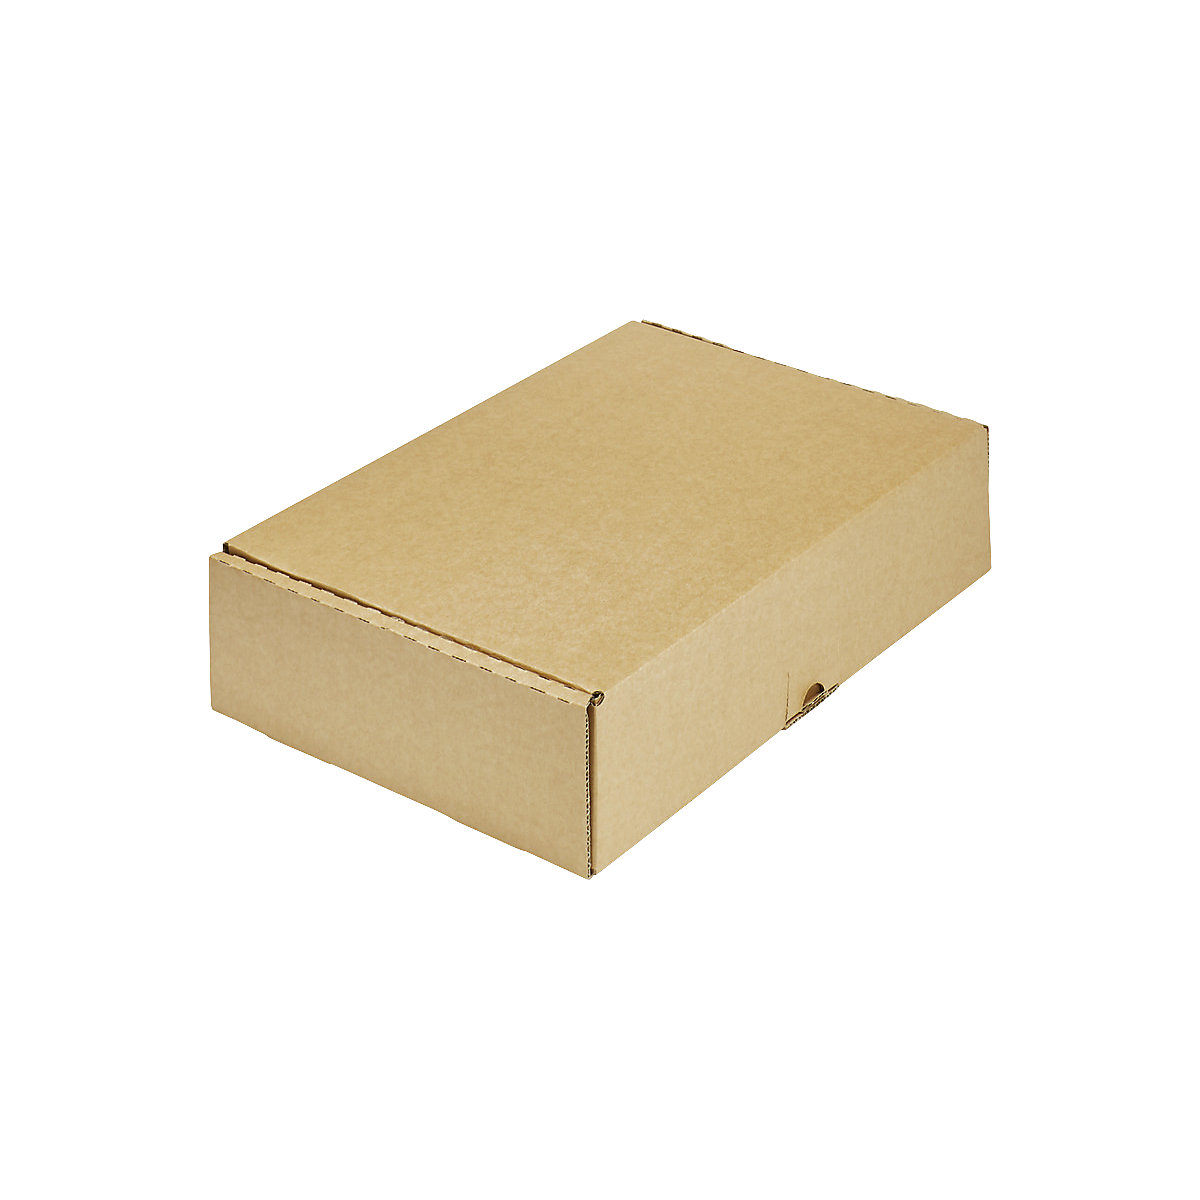 Klappbox, 1-wellig, braun, Innenmaße 130 x 130 x 45 mm, VE 50 Stk, ab 5 VE